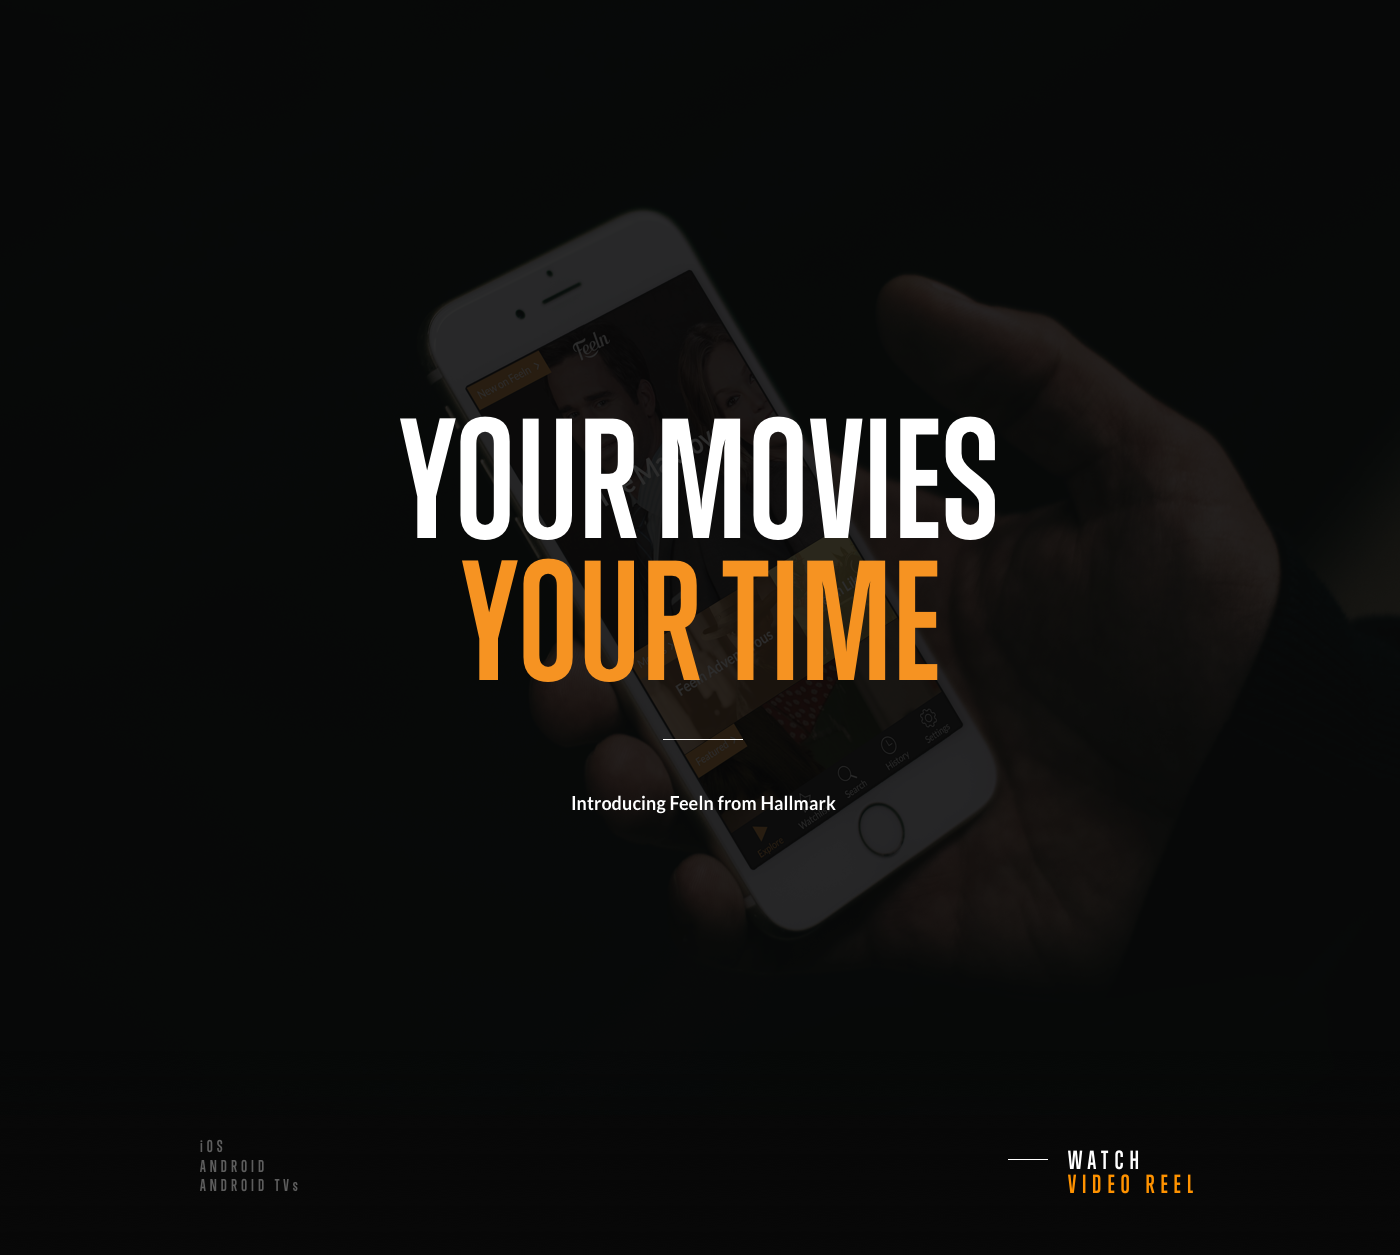 movie ui  Streaming dark ui iOS App iOS UI material design 3d mockup orange STRV strvcom Movies TV shows orange UI movies app